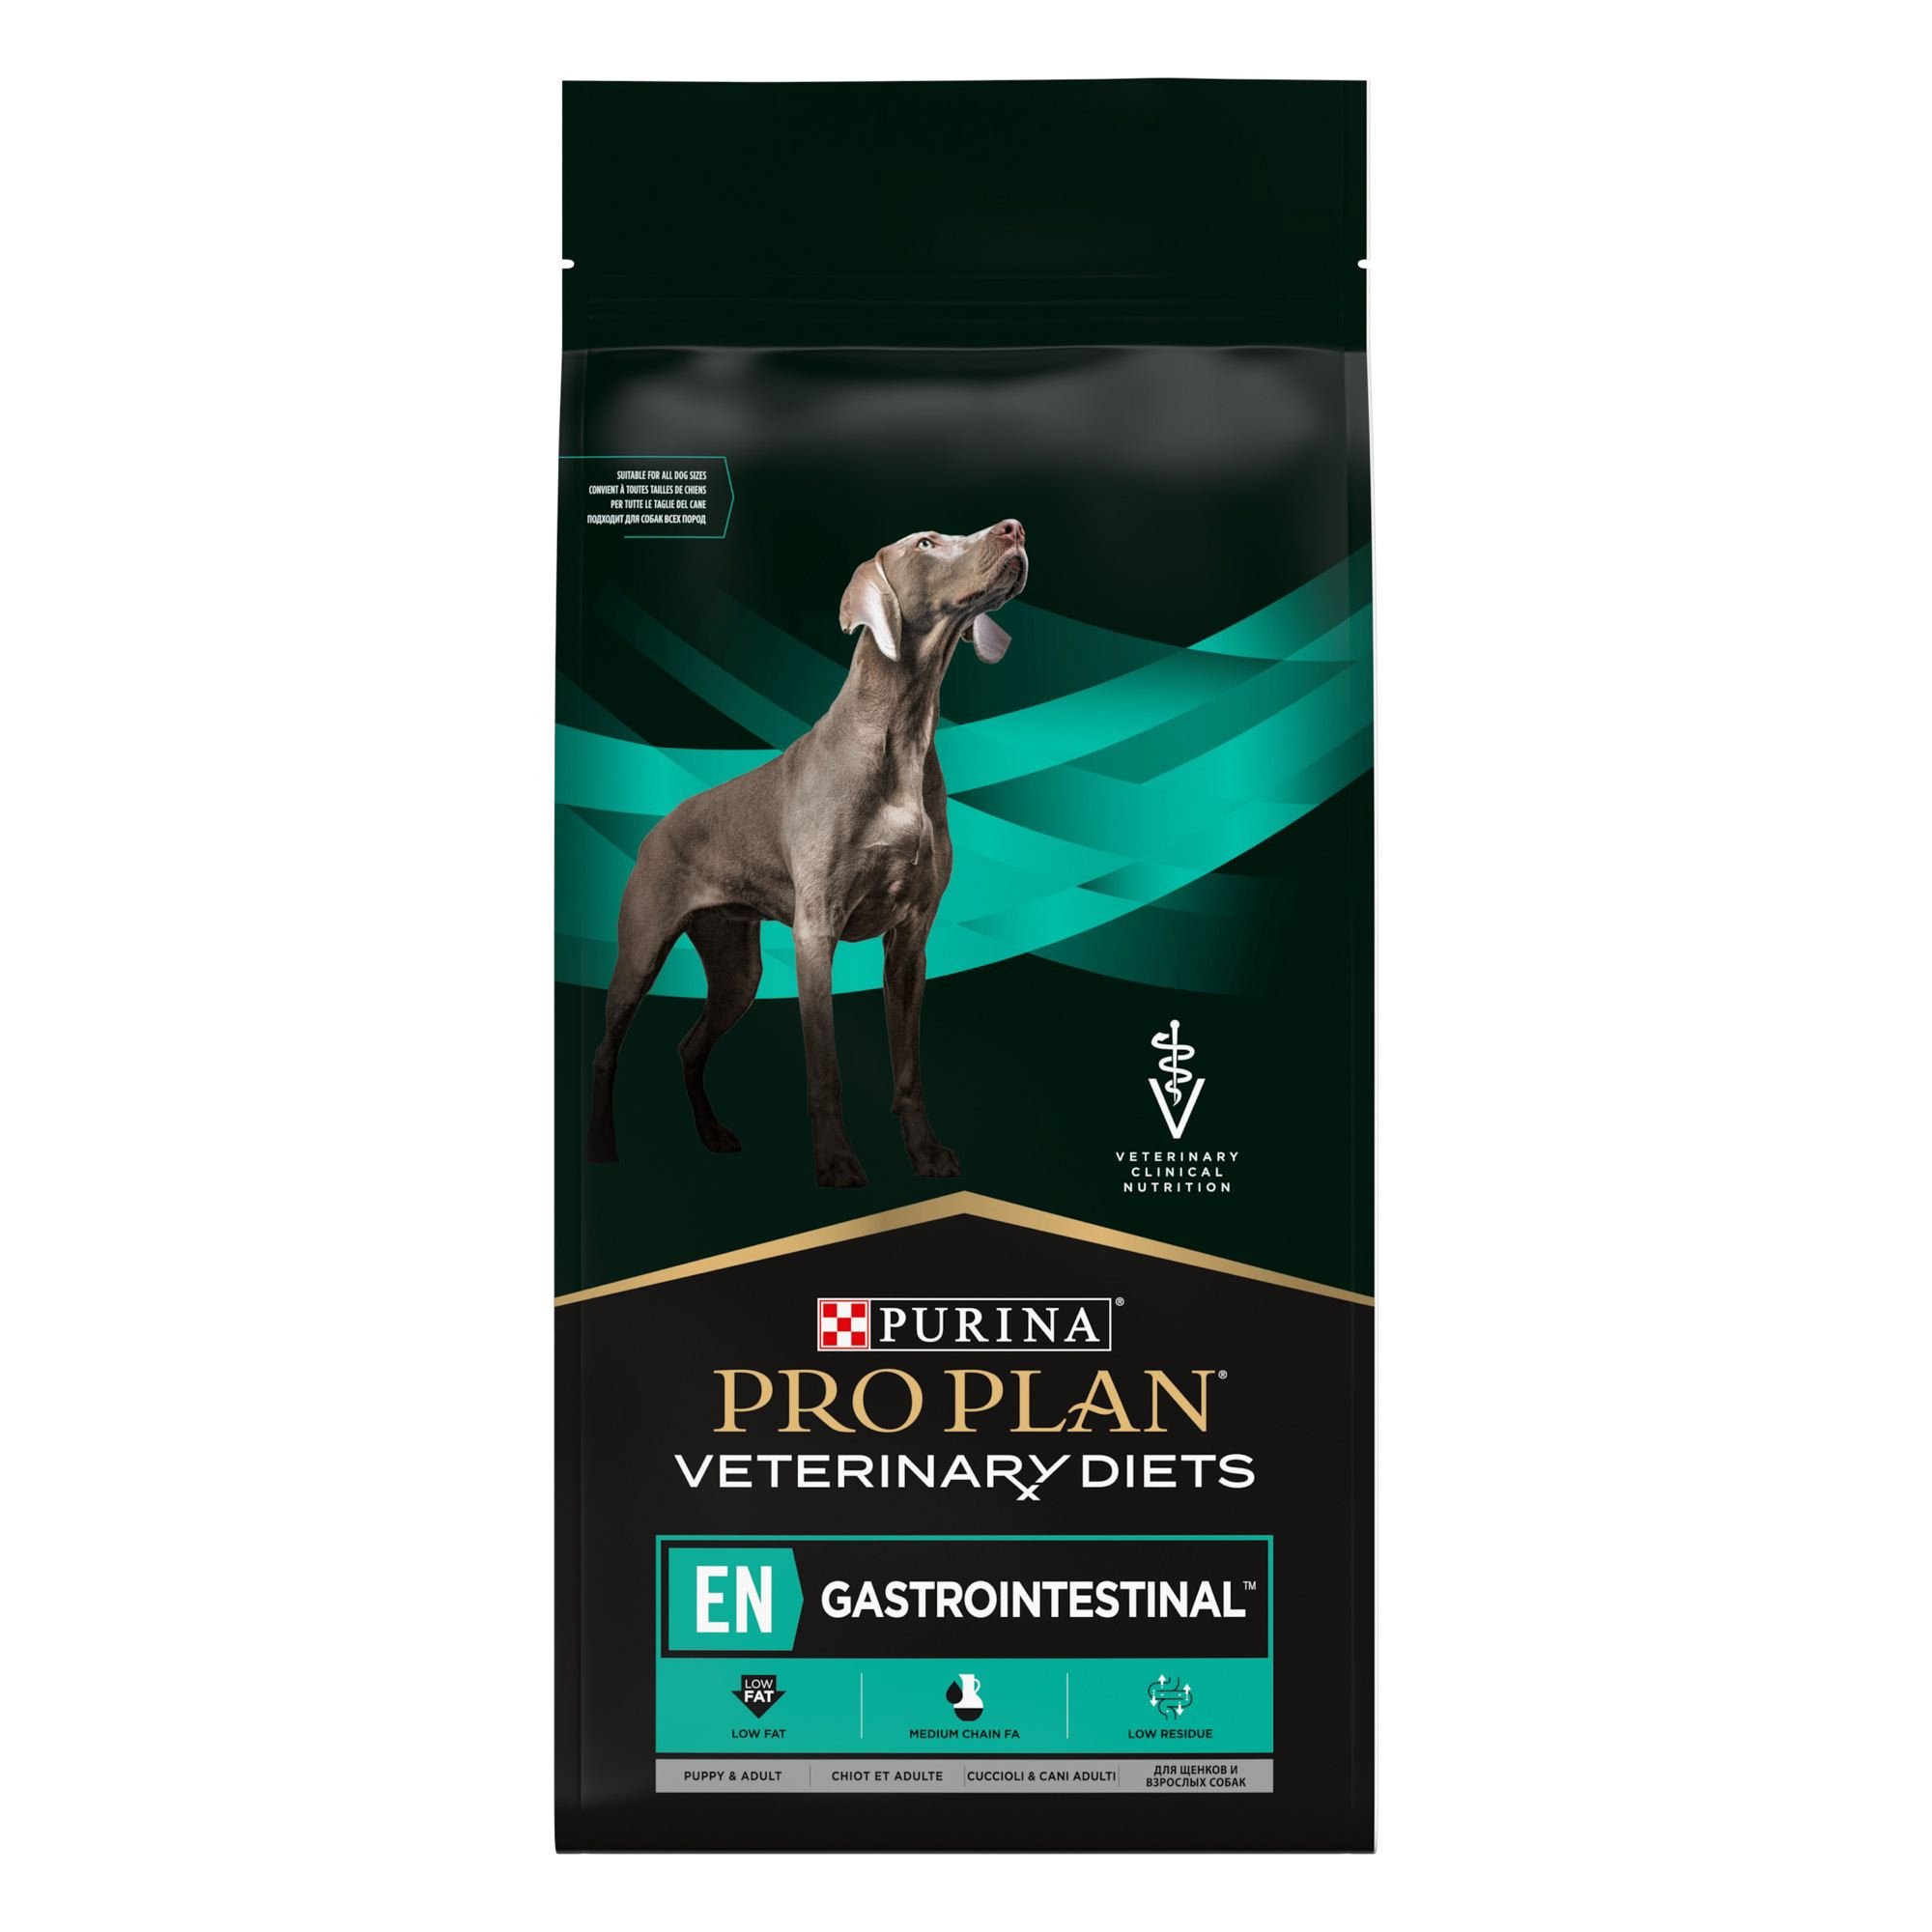 Сухой корм для собак при заболеваниях желудочно-кишечного тракта Purina Pro Plan Veterinary Diets EN Gastrointestinal, 12 кг - фото 2